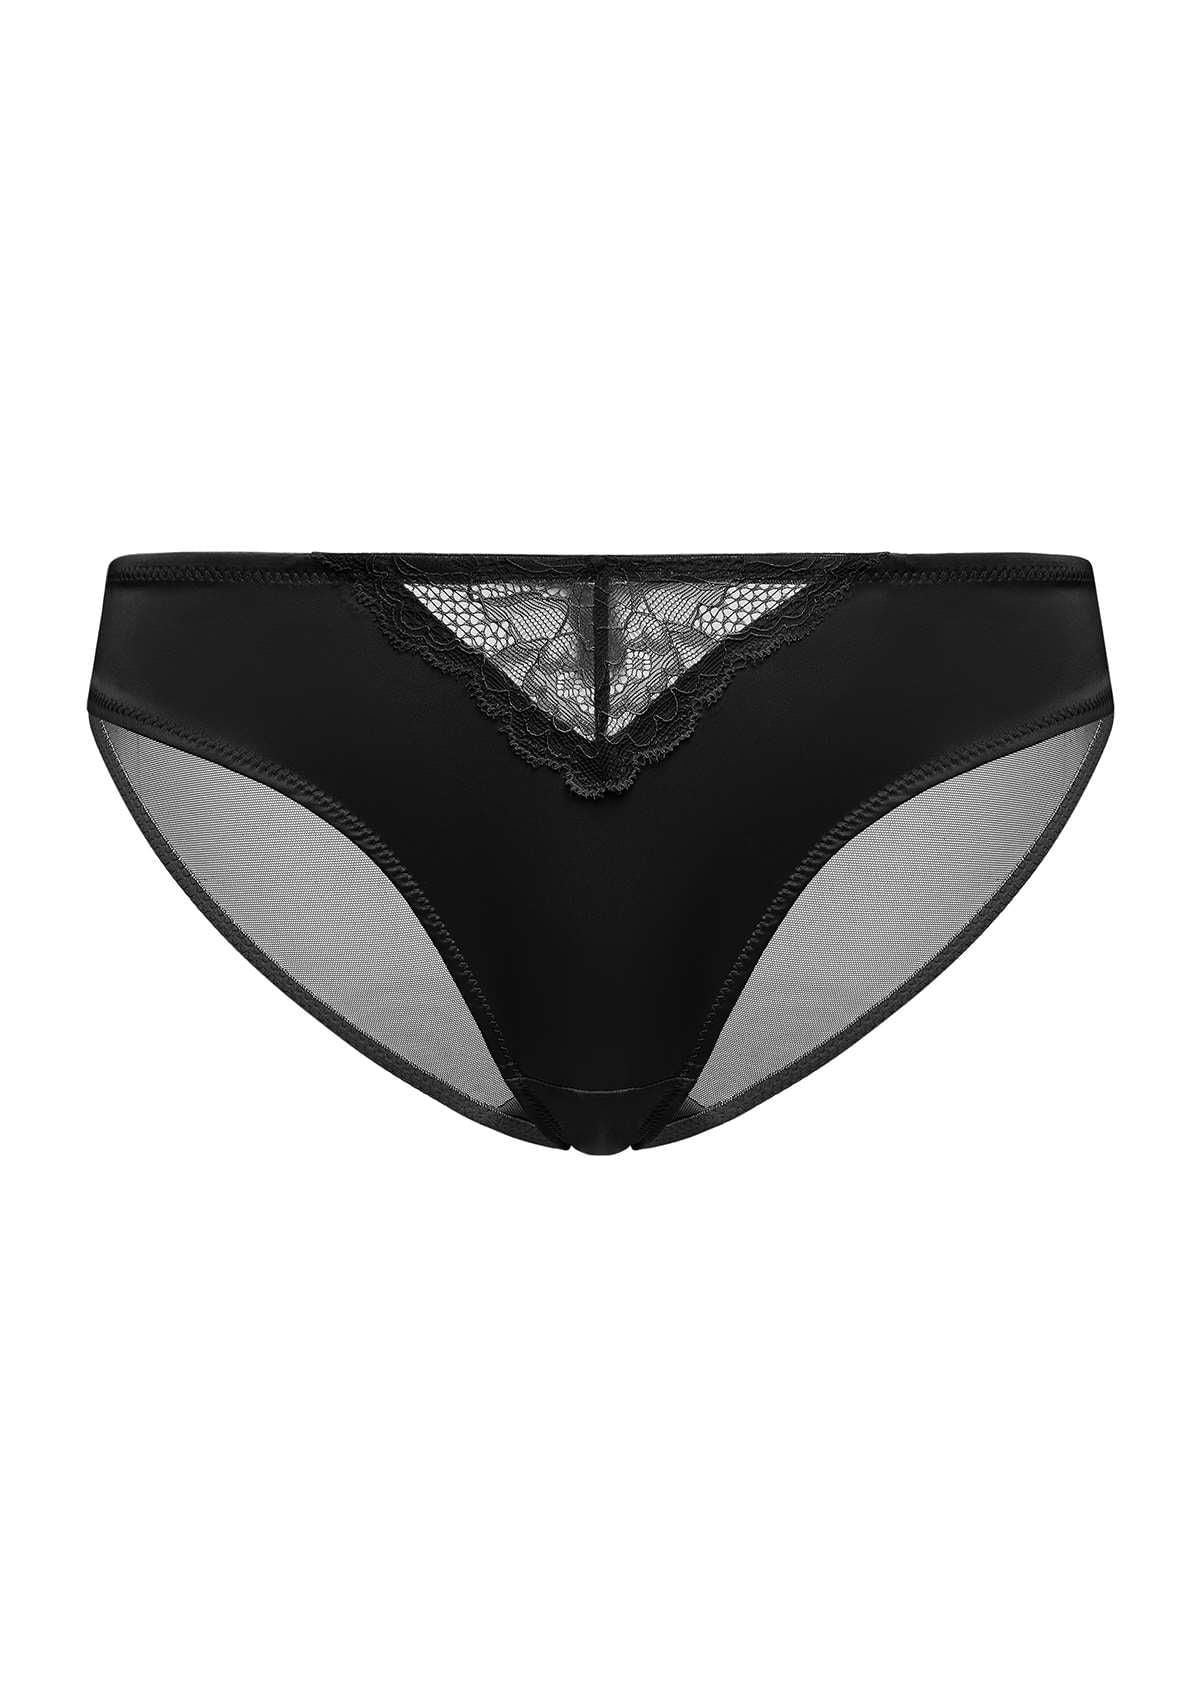 HSIA Foxy Satin Soft Low-Rise Mesh Lace-Trimmed Elegant Underwear - L / Black